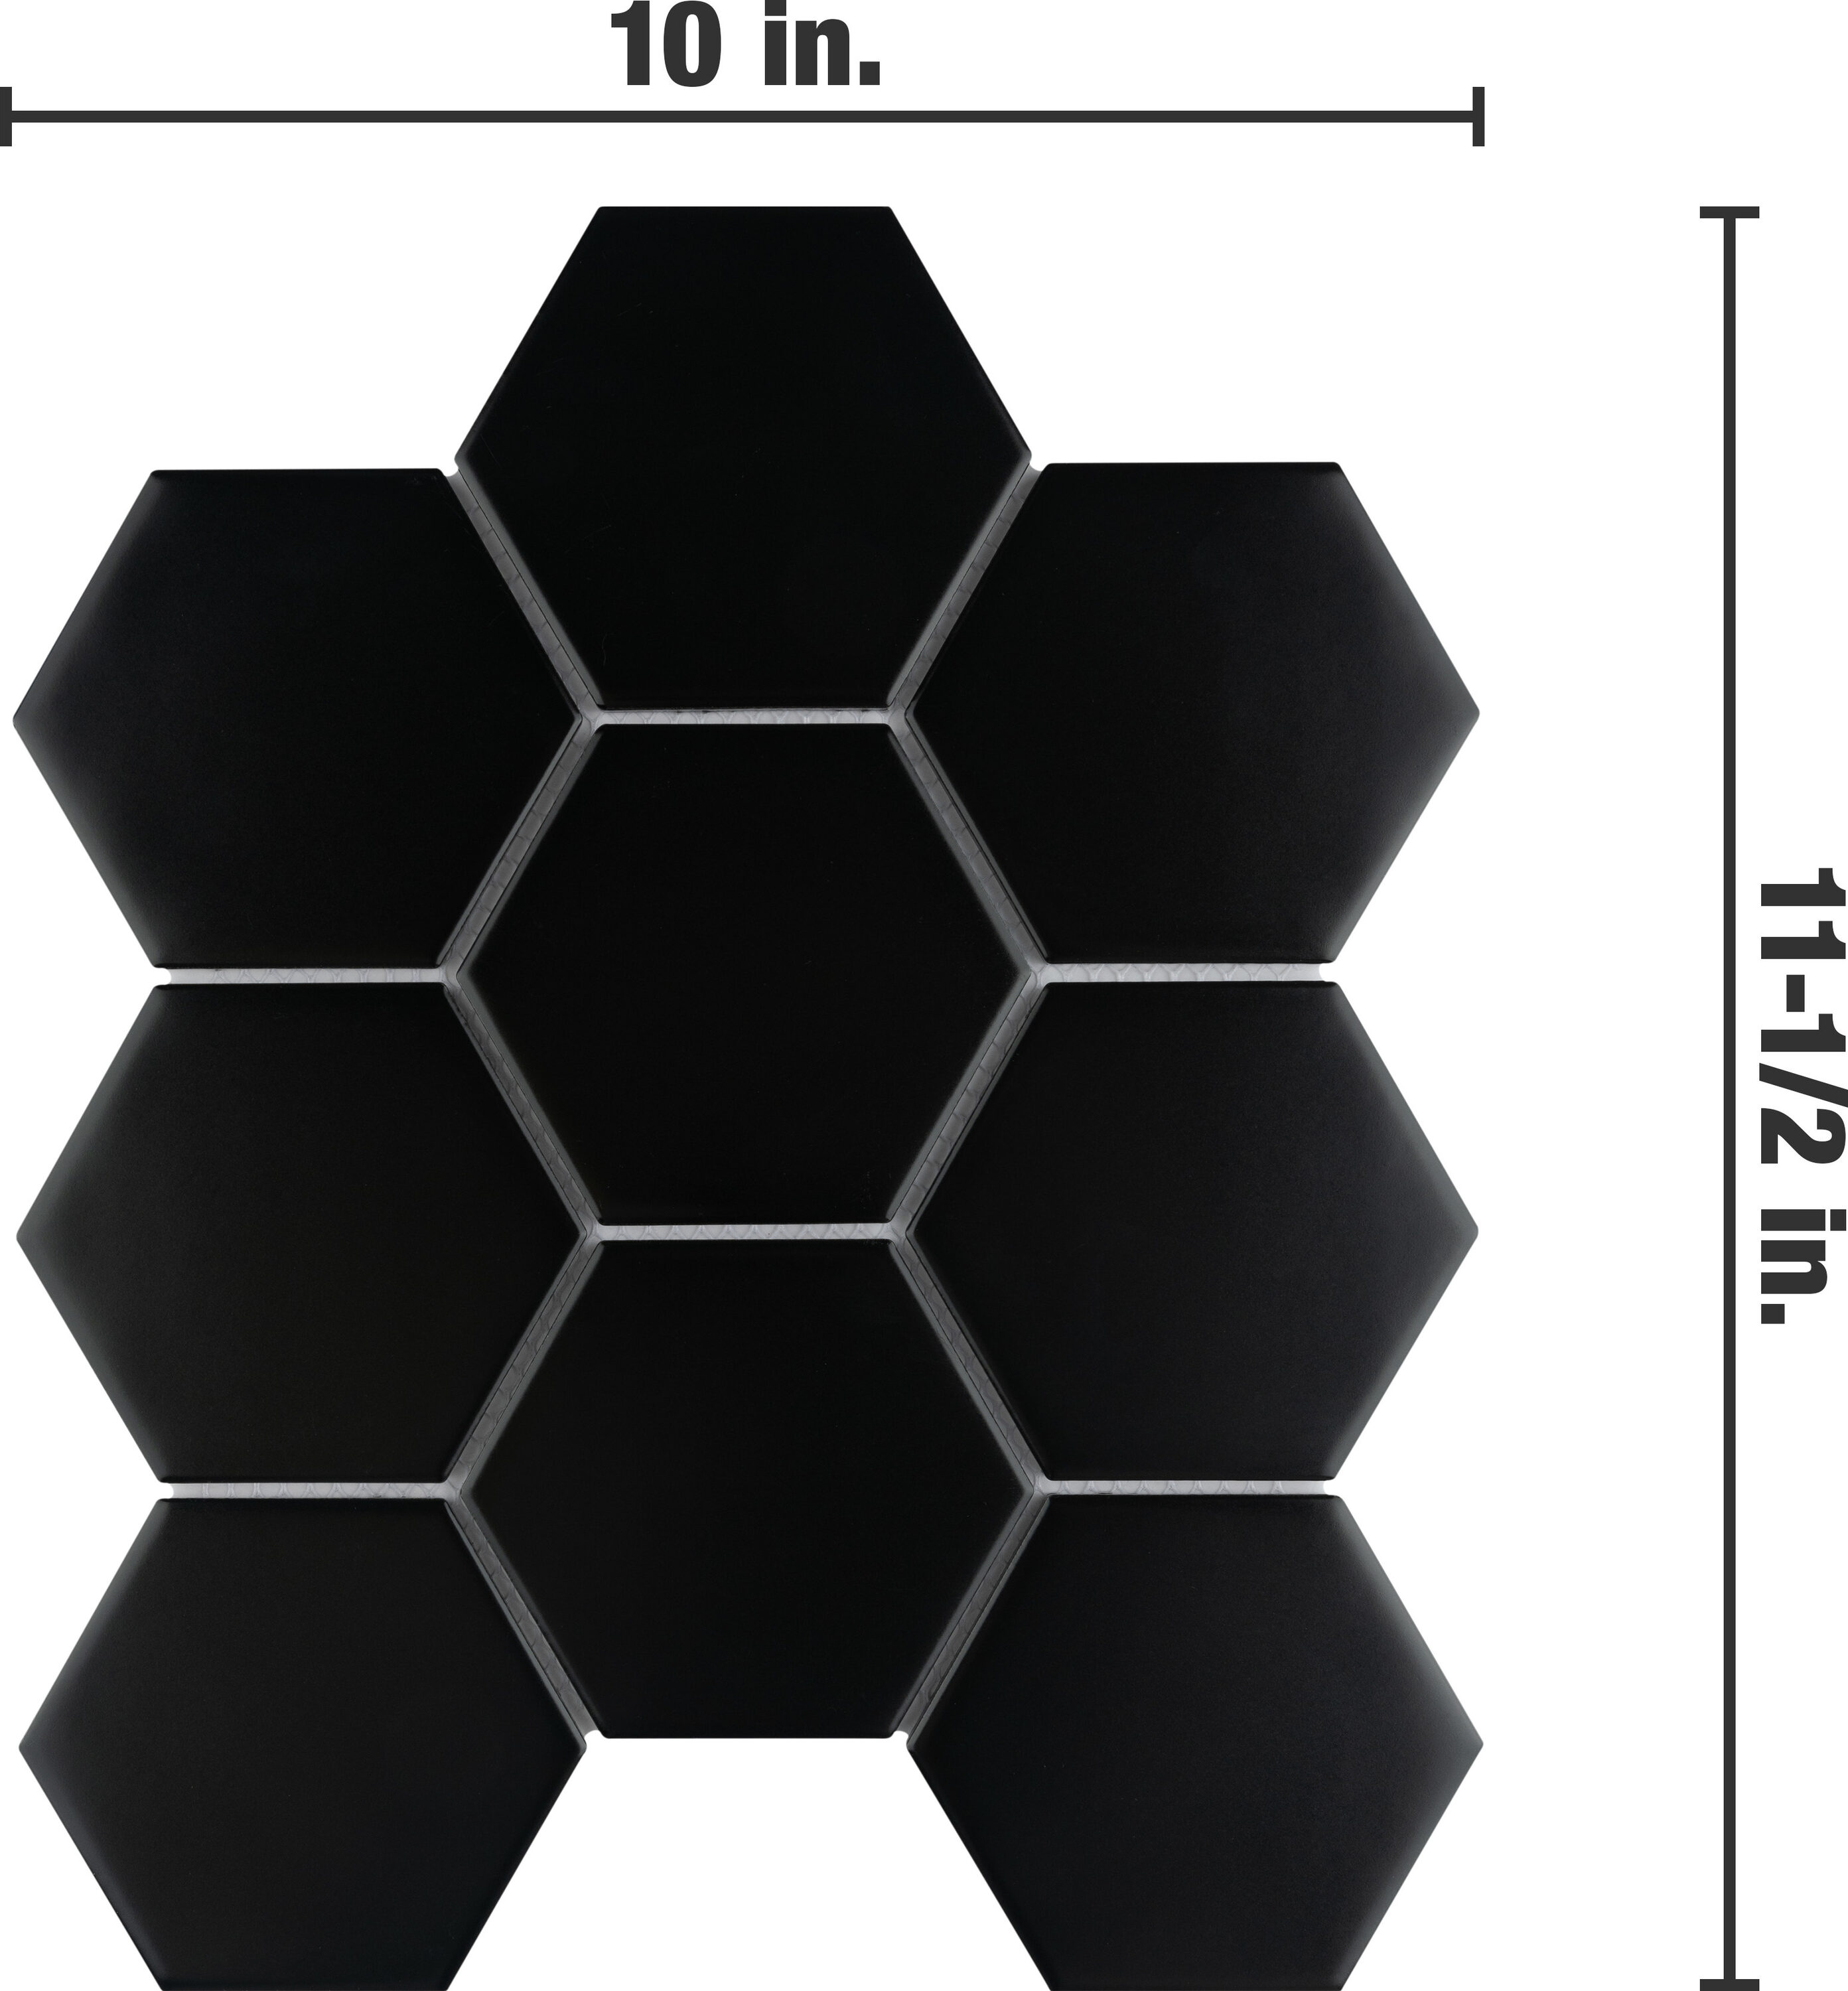 WS Tiles - Sample - Value Series 2 inch x 2 inch Hexagon Porcelain Mosaic Tile in Matte Black